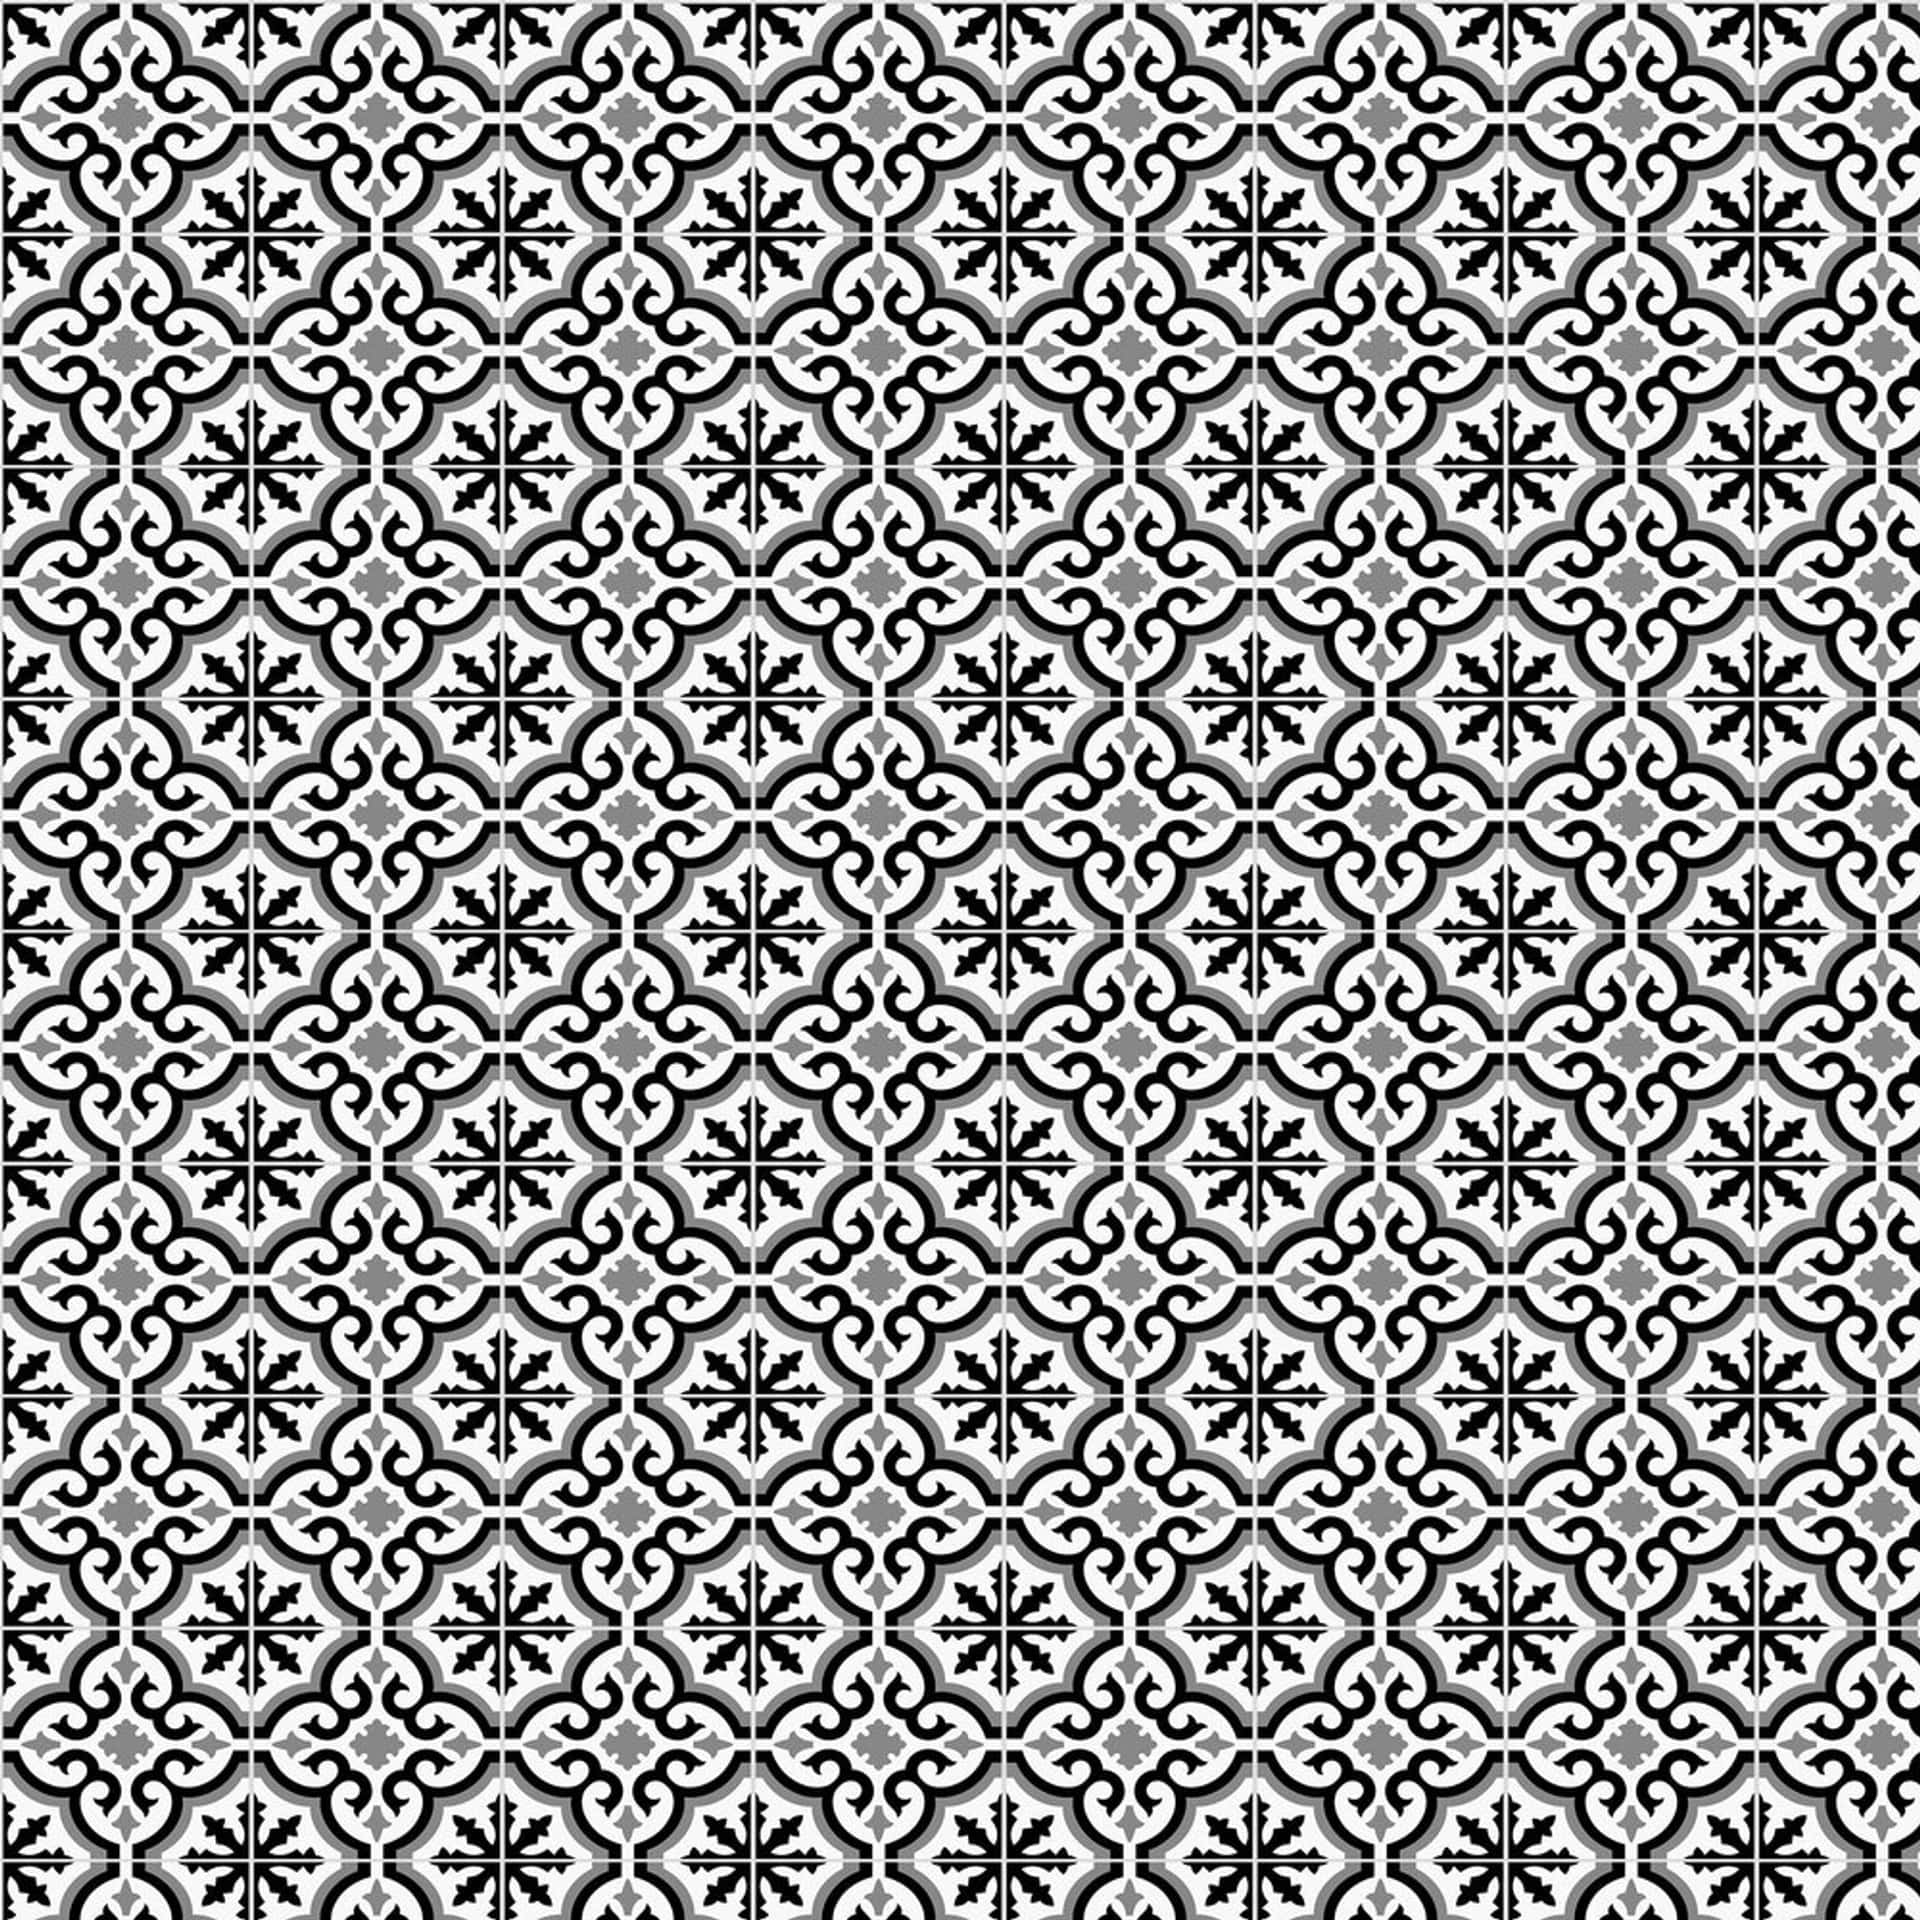 Captivating Black and White Geometric Design Wallpaper